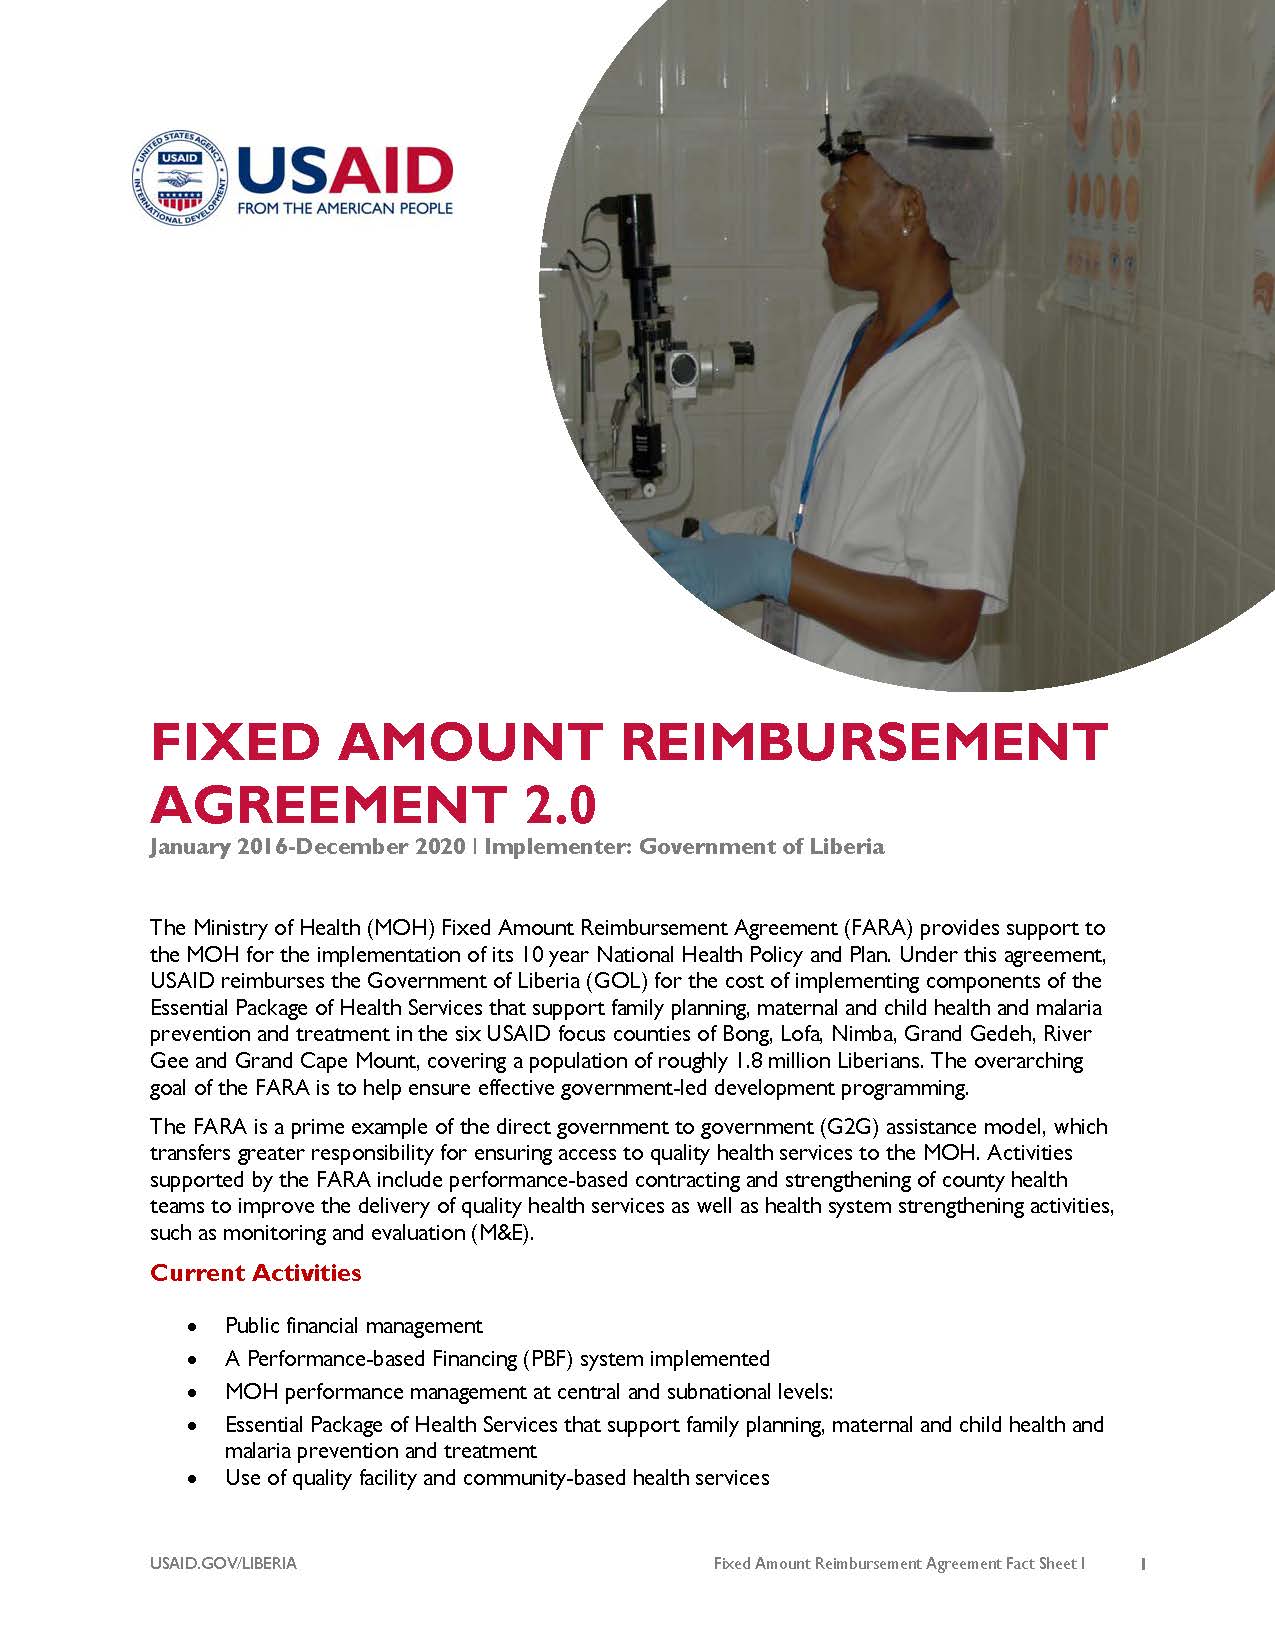 Fixed Amount Reimbursement Agreement  Activity